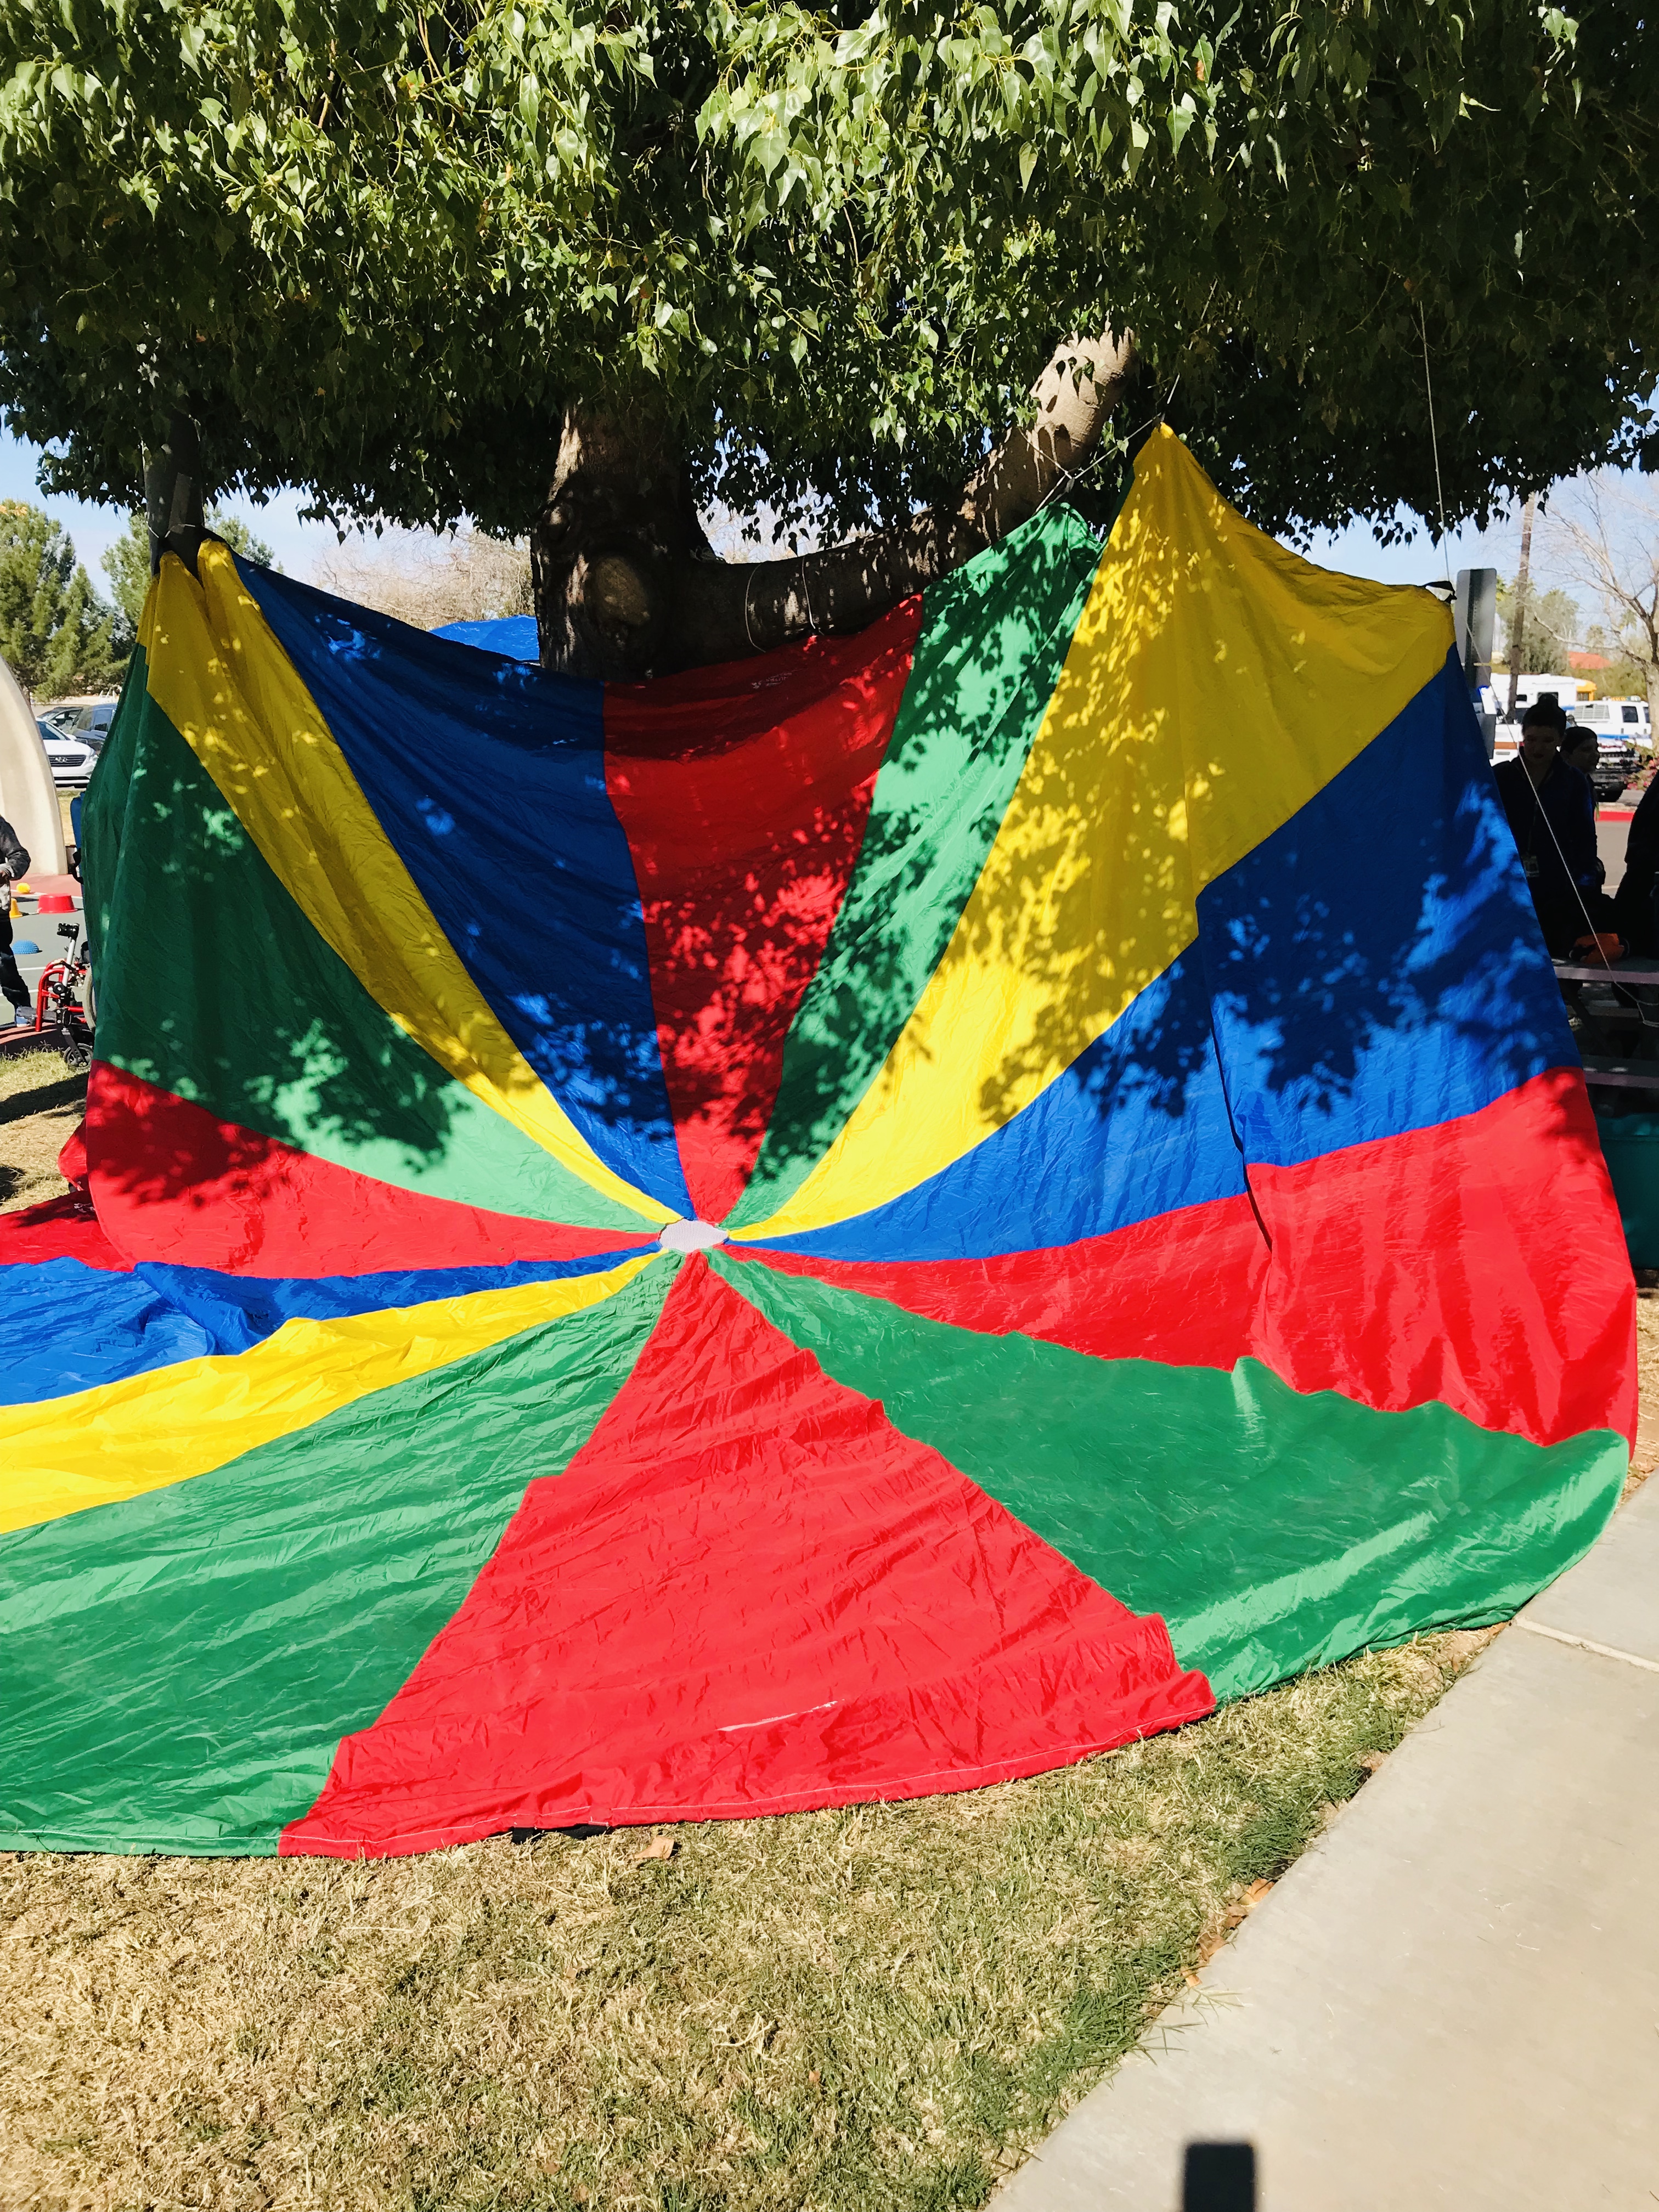 Rainbow parachute